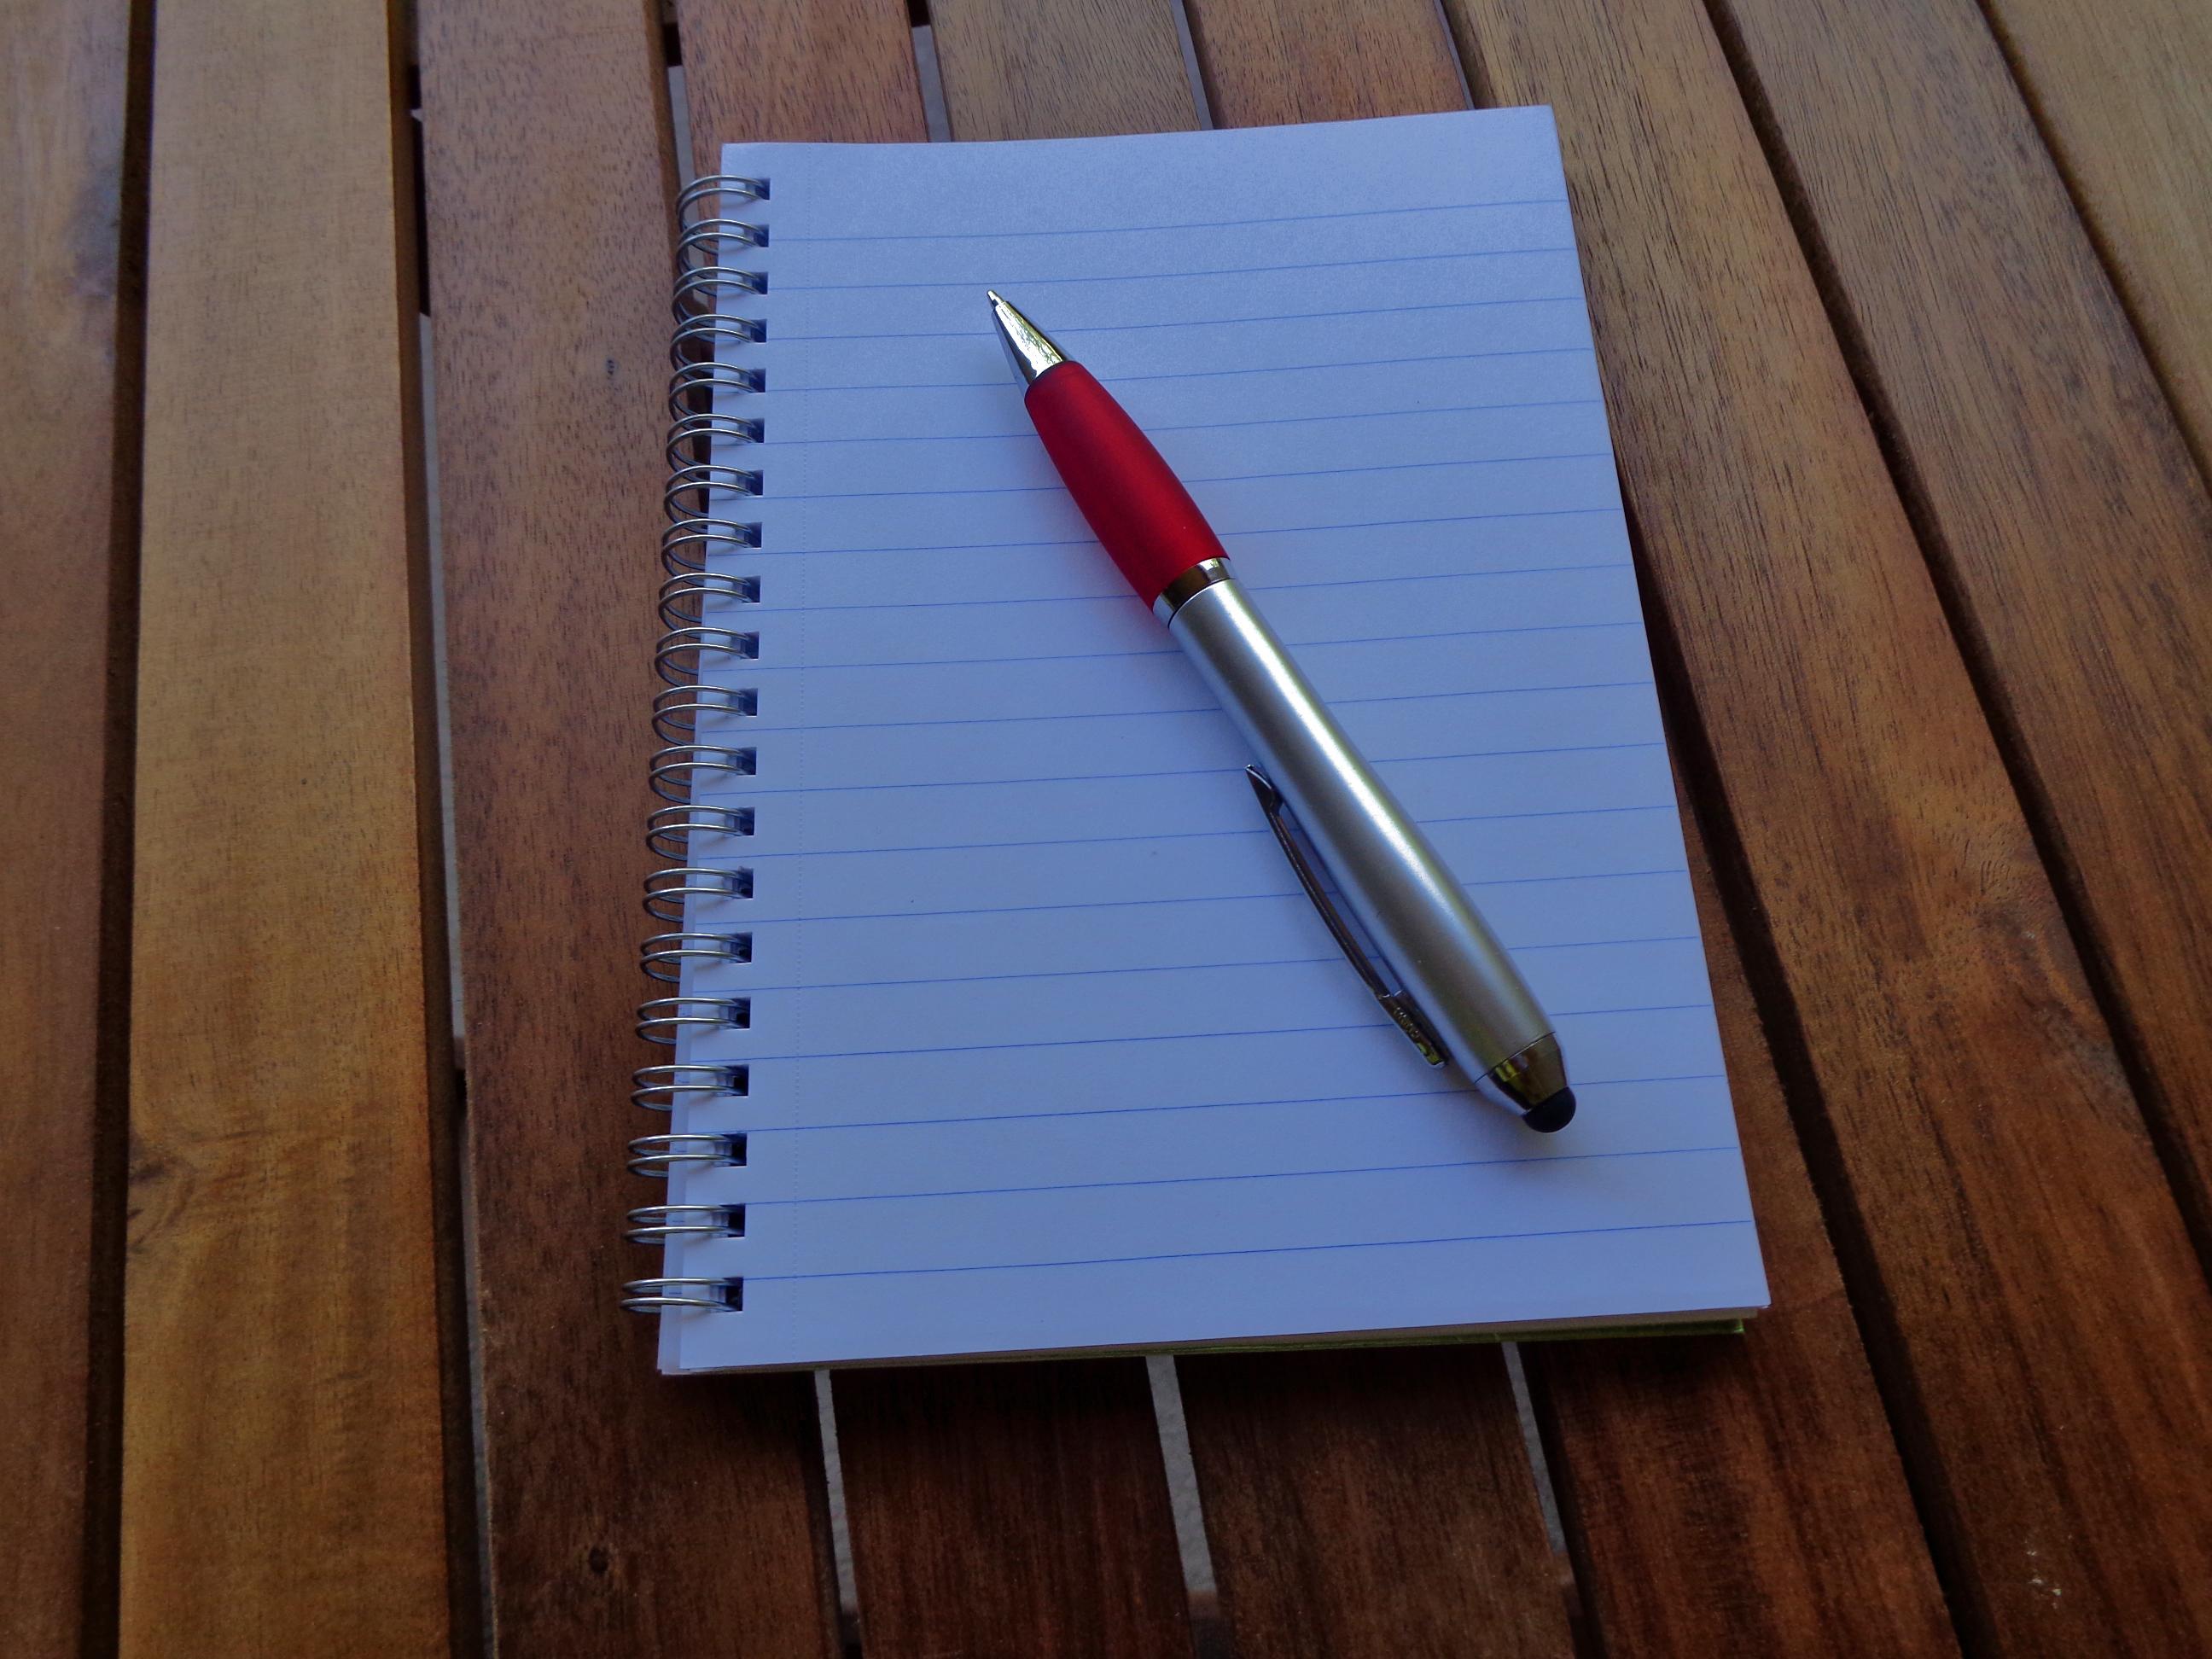 Pen note. Блокнот с ручкой. Лист блокнота с ручкой. Блокнот на столе. Ручка с тетрадкой.